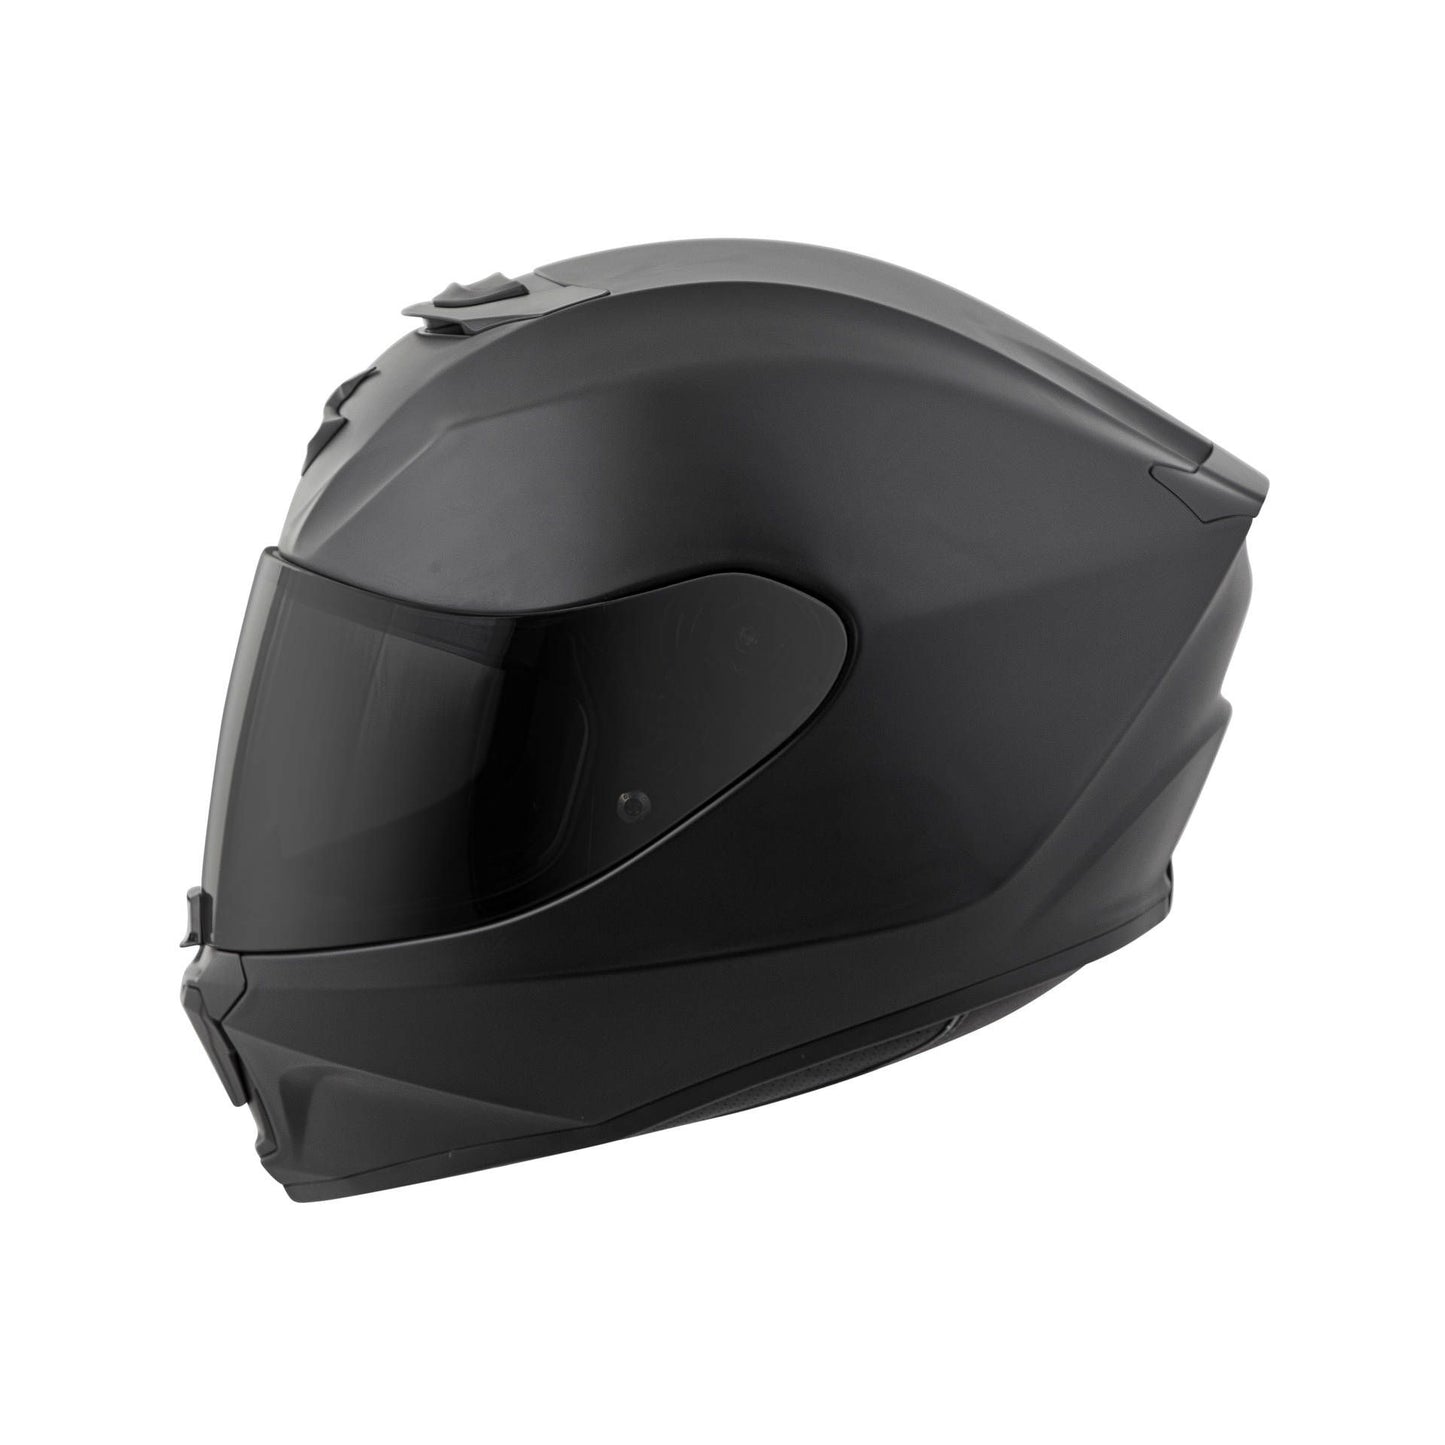 Scorpion EXO-R420 Solid Helmet - Ottawa Goodtime Centre 